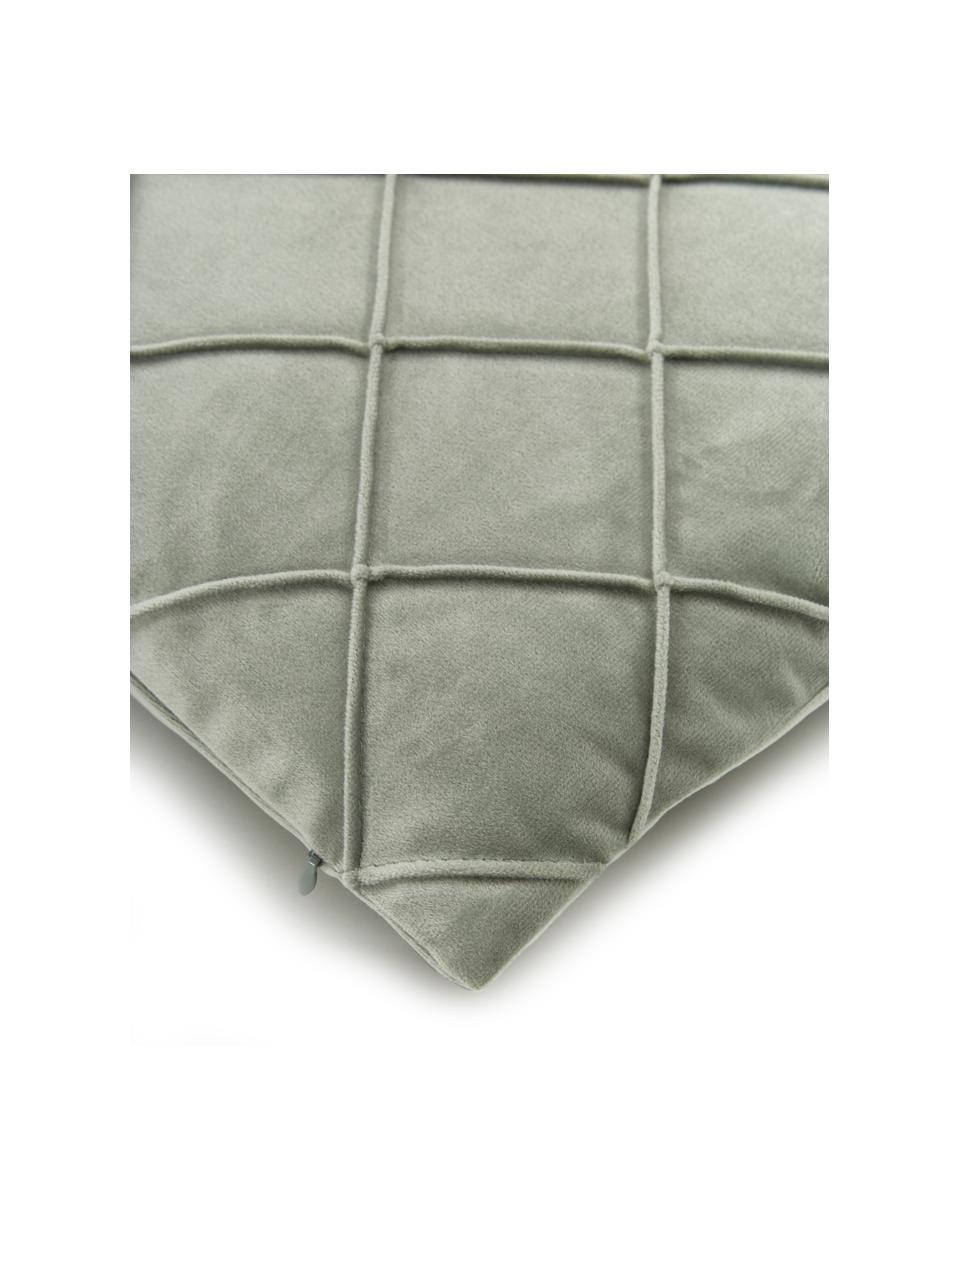 Samt-Kissenhülle Luka in Salbeigrün mit Struktur-Karomuster, Samt (100% Polyester), Salbeigrün, B 30 x L 50 cm